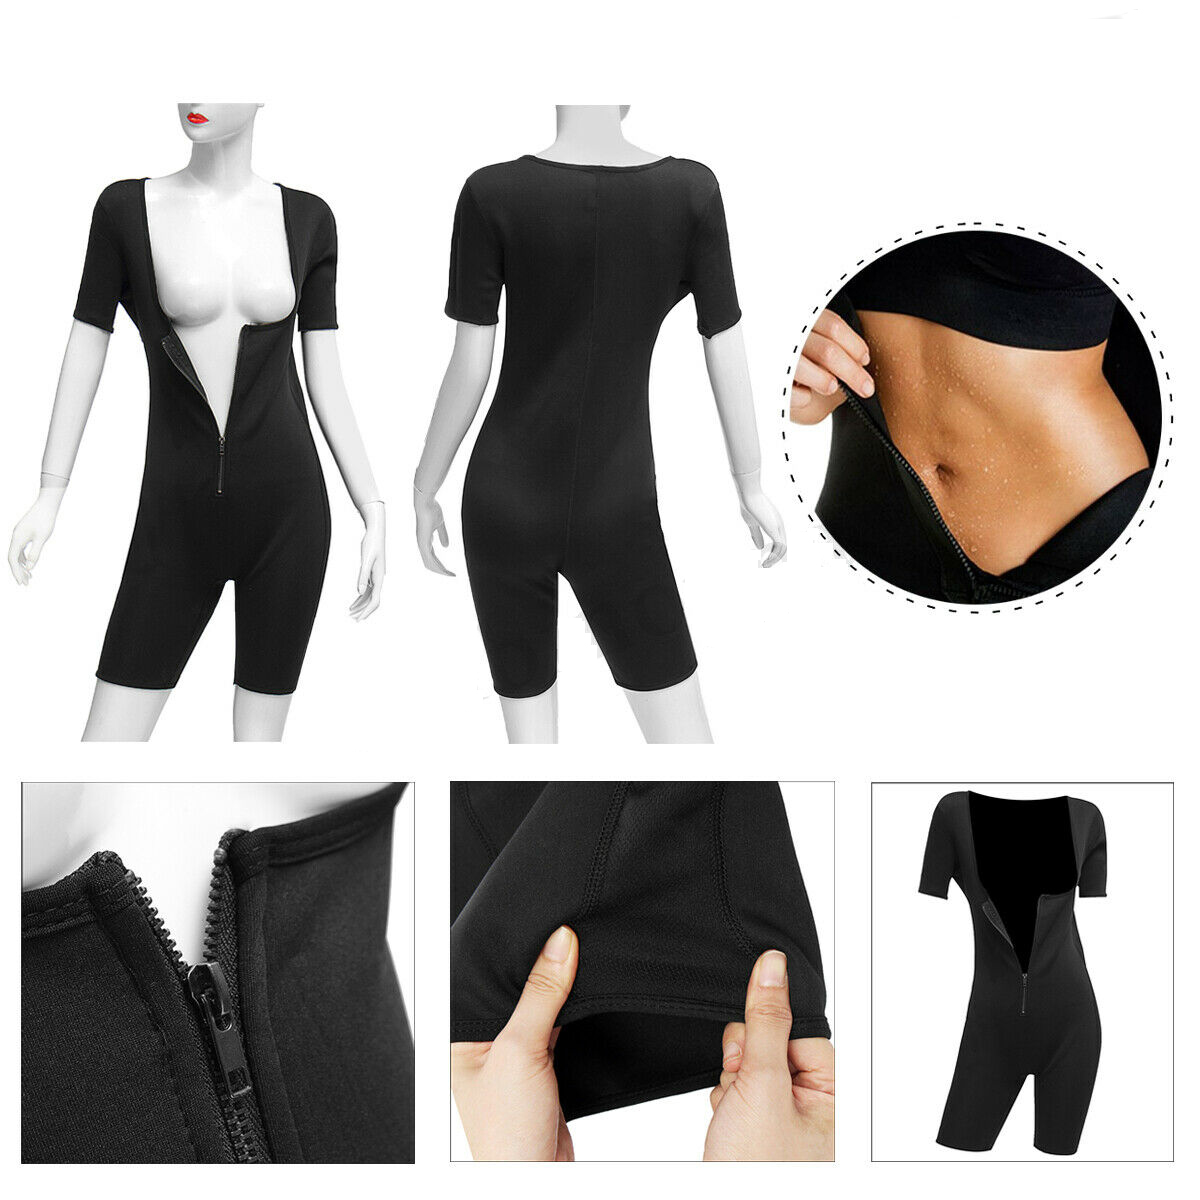 Womens-Shapewear-Full-Body-Sweat-Shaper-Slimming-Fitness-Gym-Sport-Sauna-Suit-Vest-1462685-1